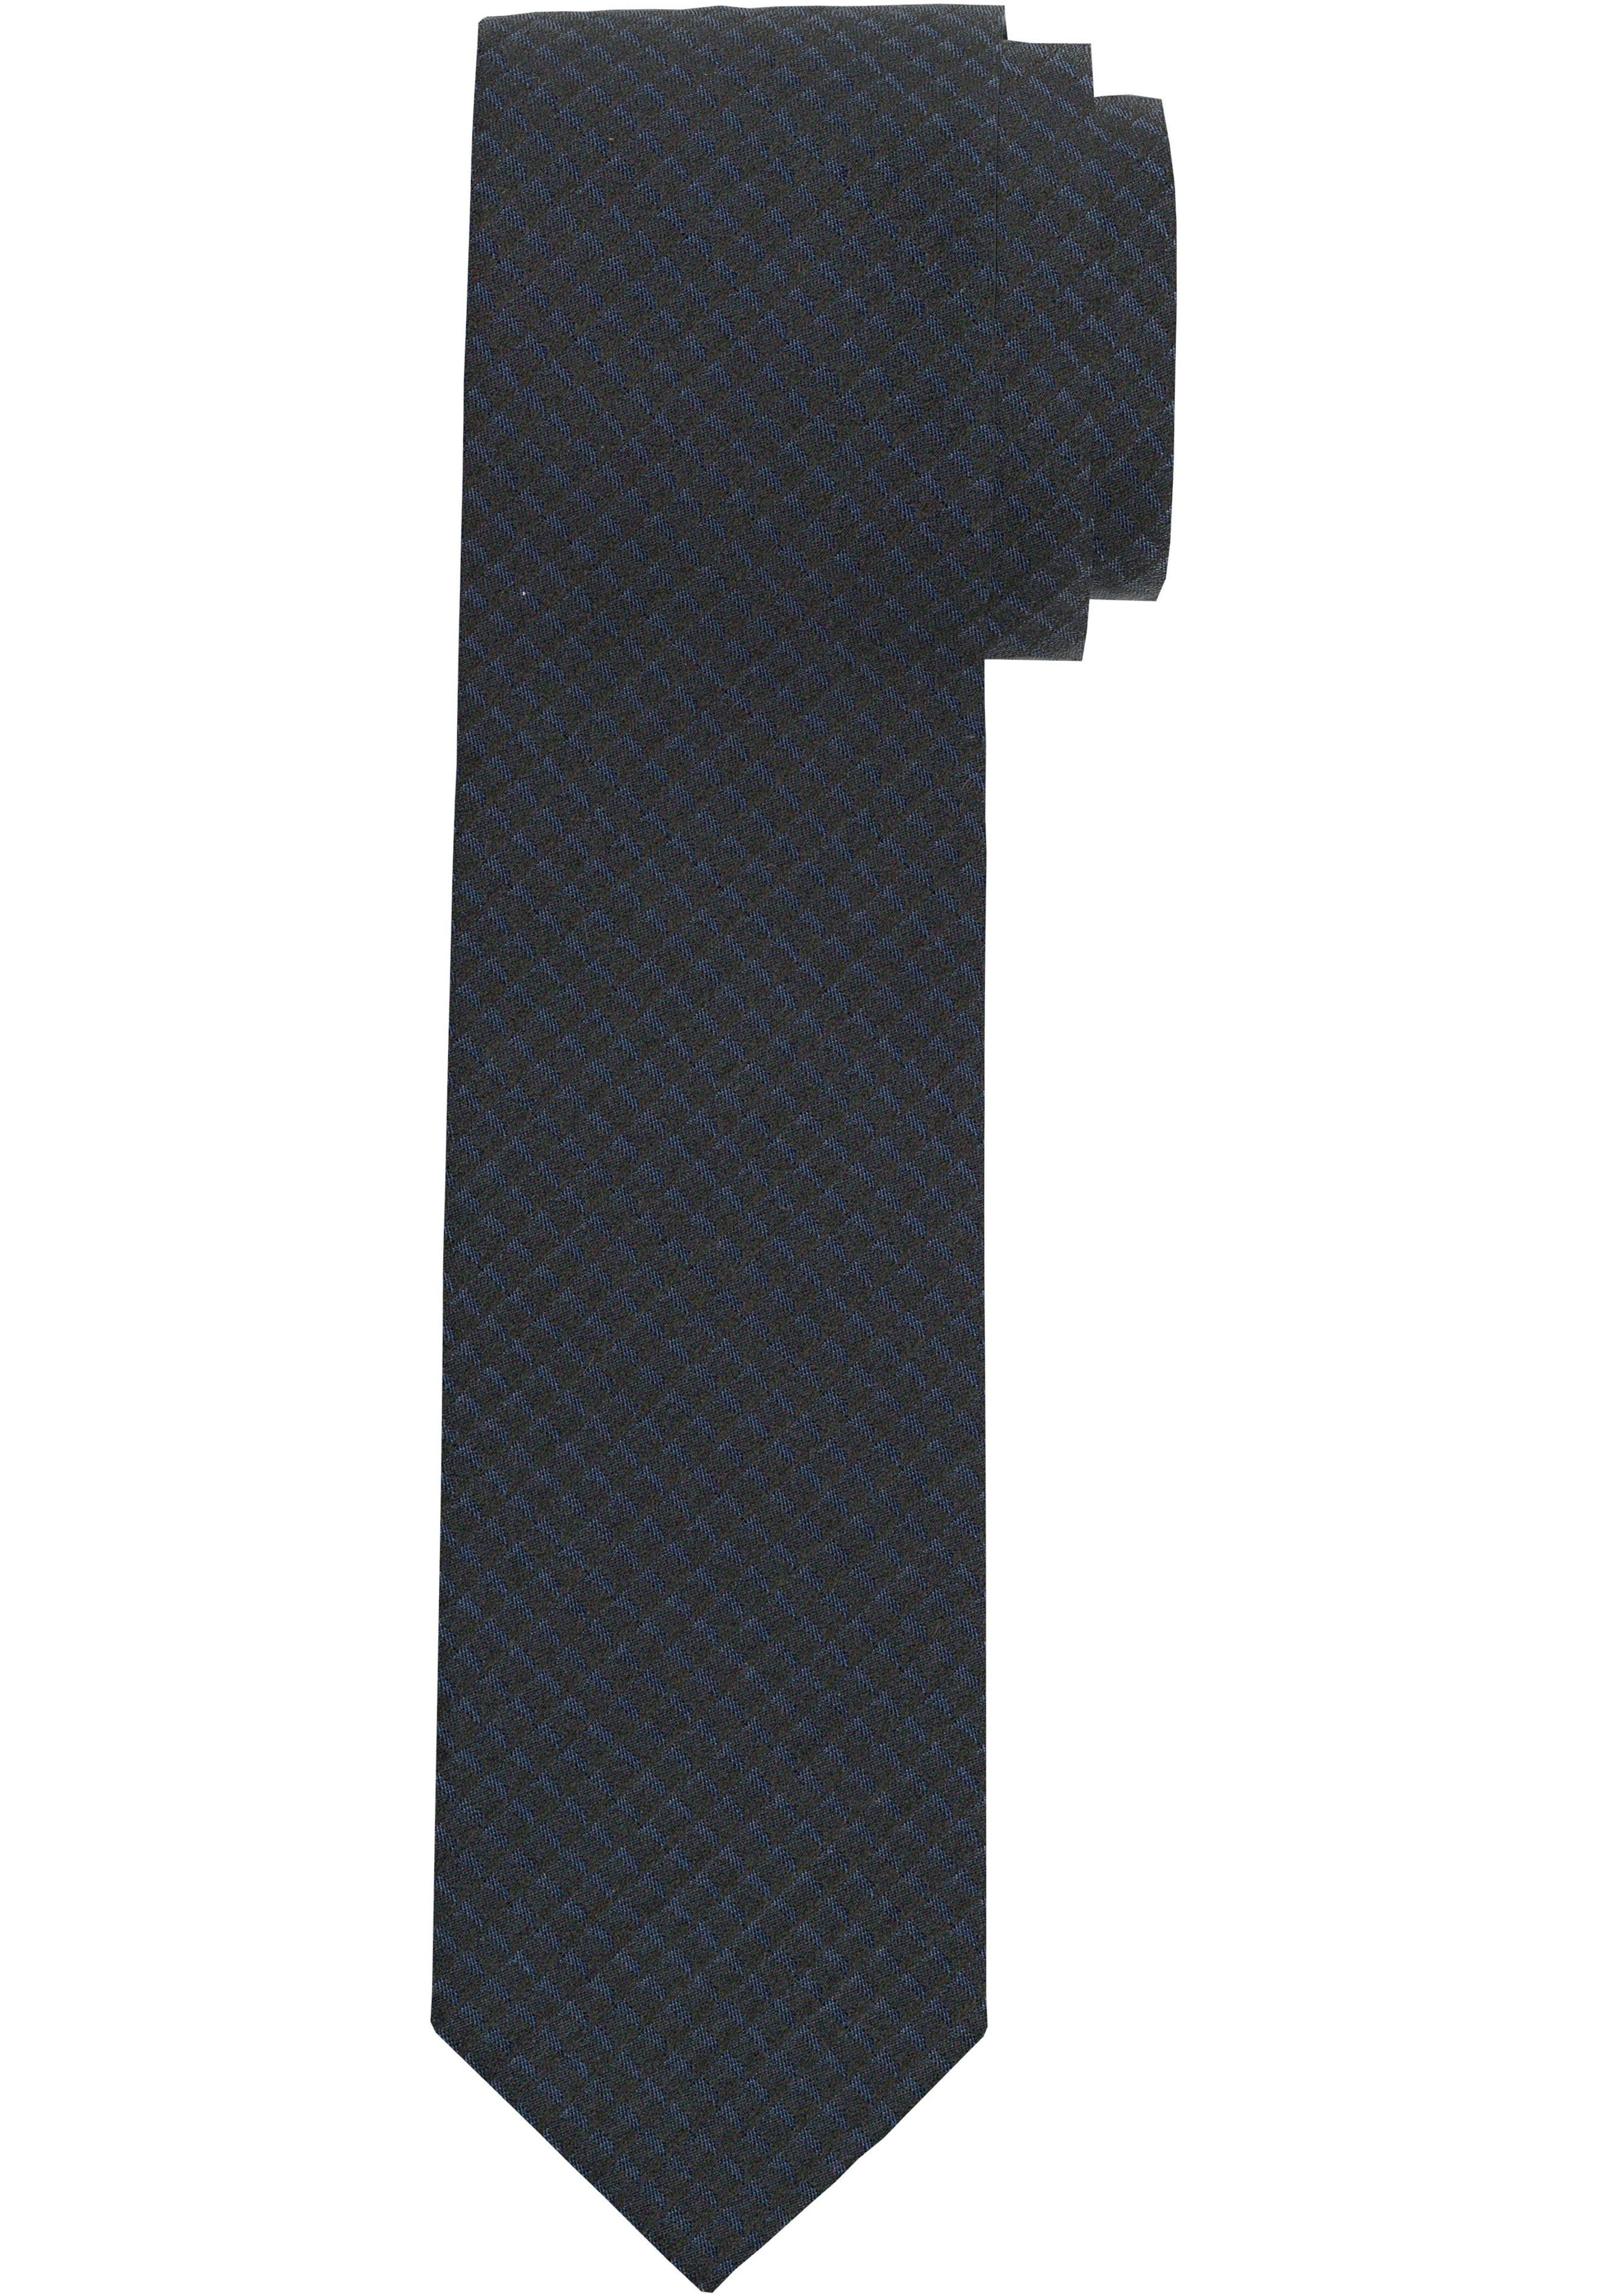 OLYMP Krawatte Krawatte marine mit Strukturmuster